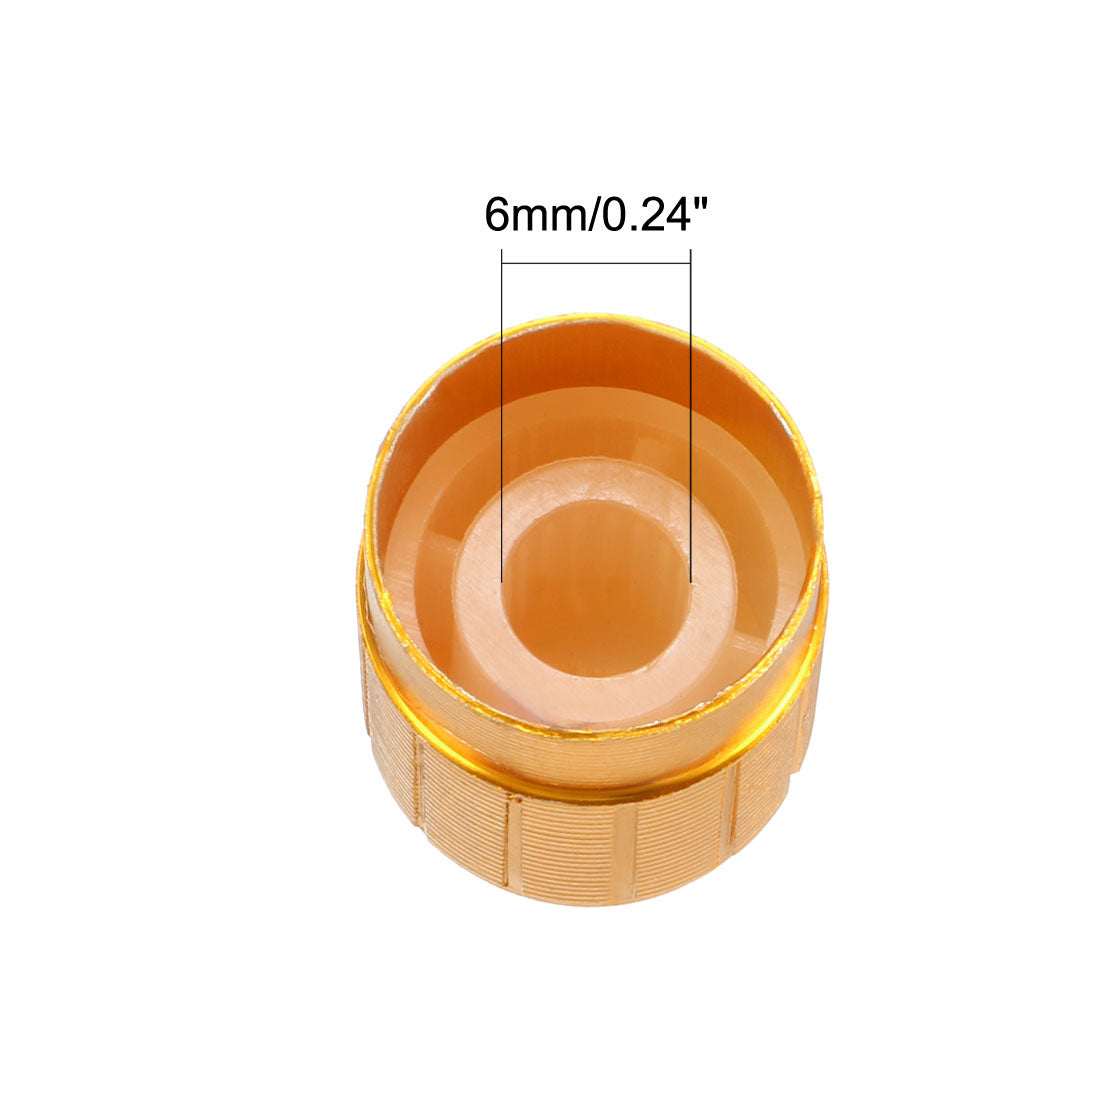 uxcell Uxcell 5Pcs 6mm Insert Shaft 16 x 14mm Aluminum Alloy Potentiometer Rotary Knob Pots Gold Tone